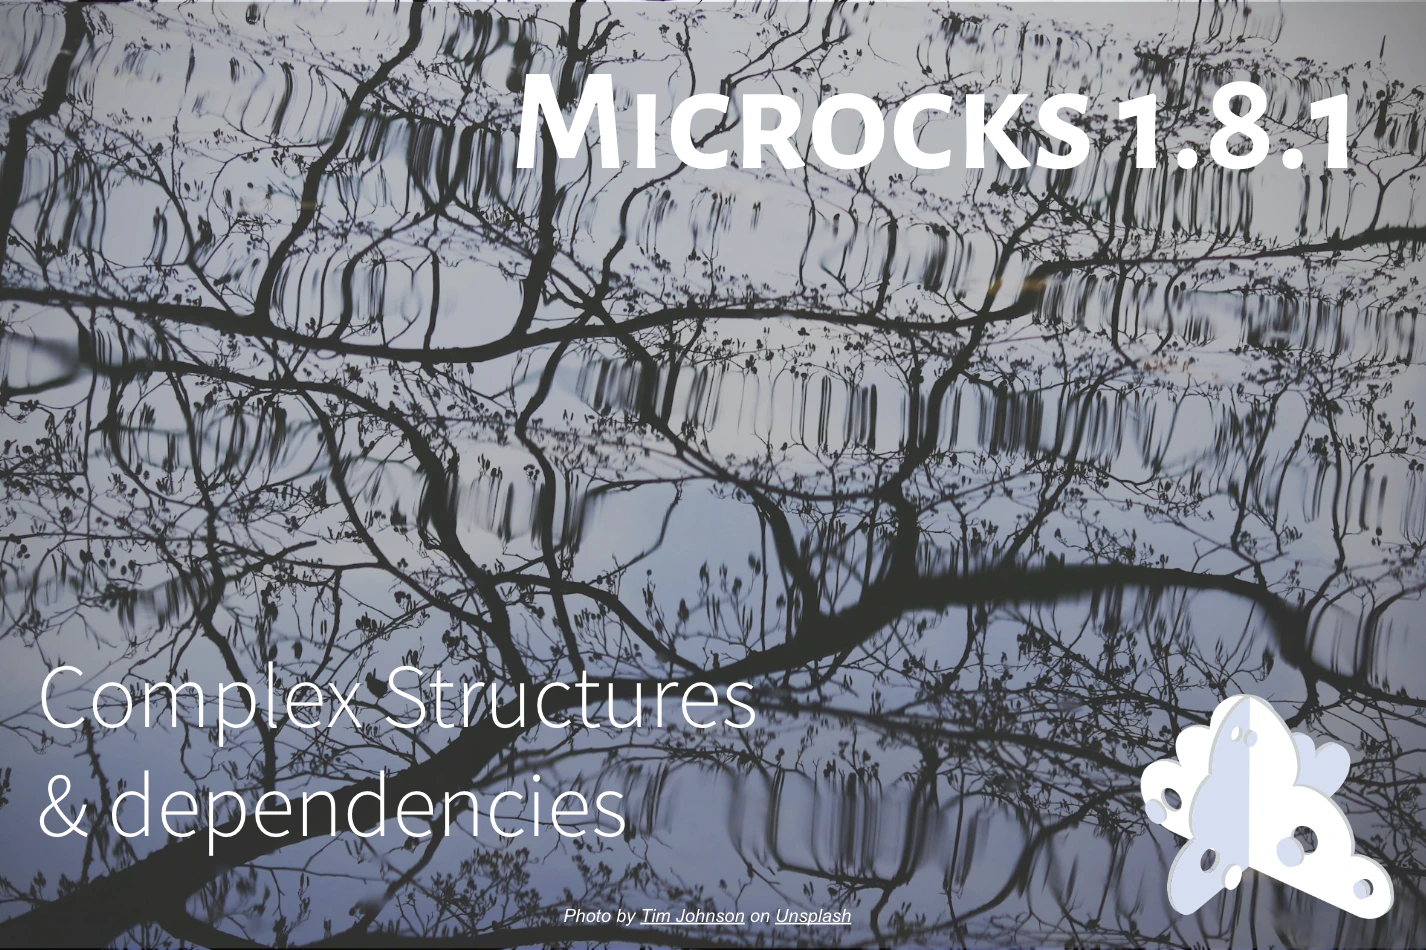 microcks-feature